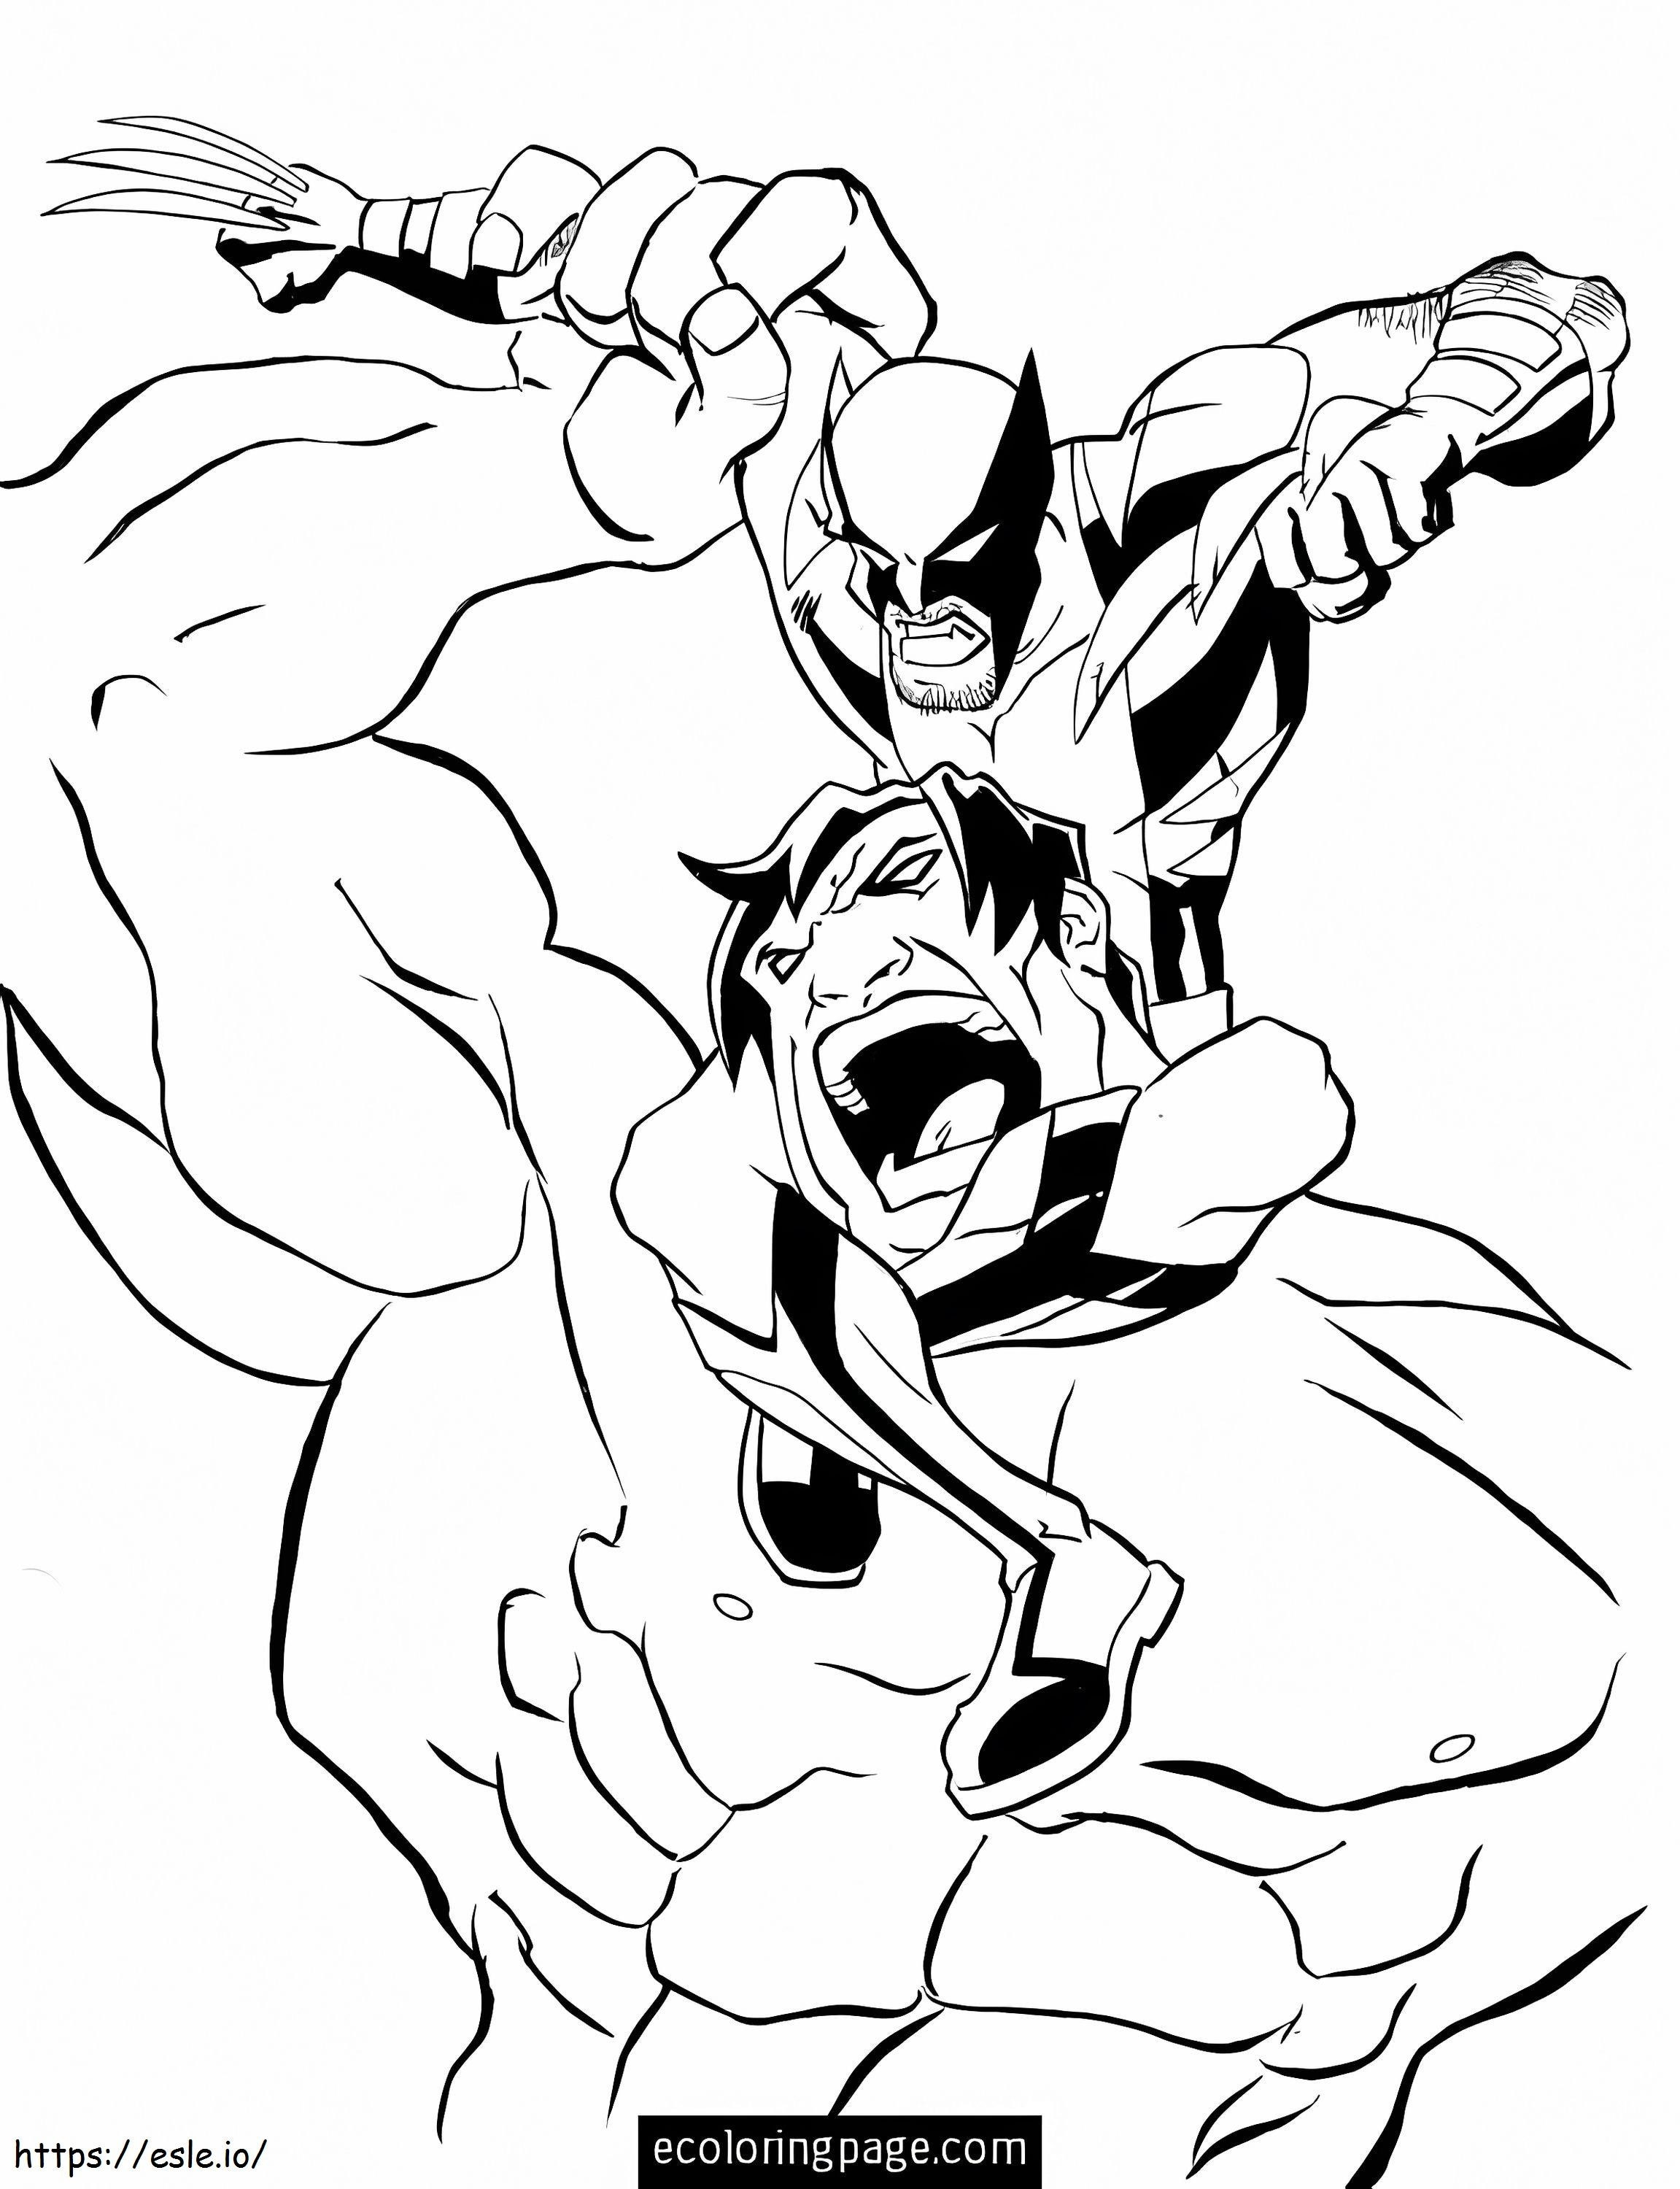 Hulk versus de Wolverine kleurplaat kleurplaat